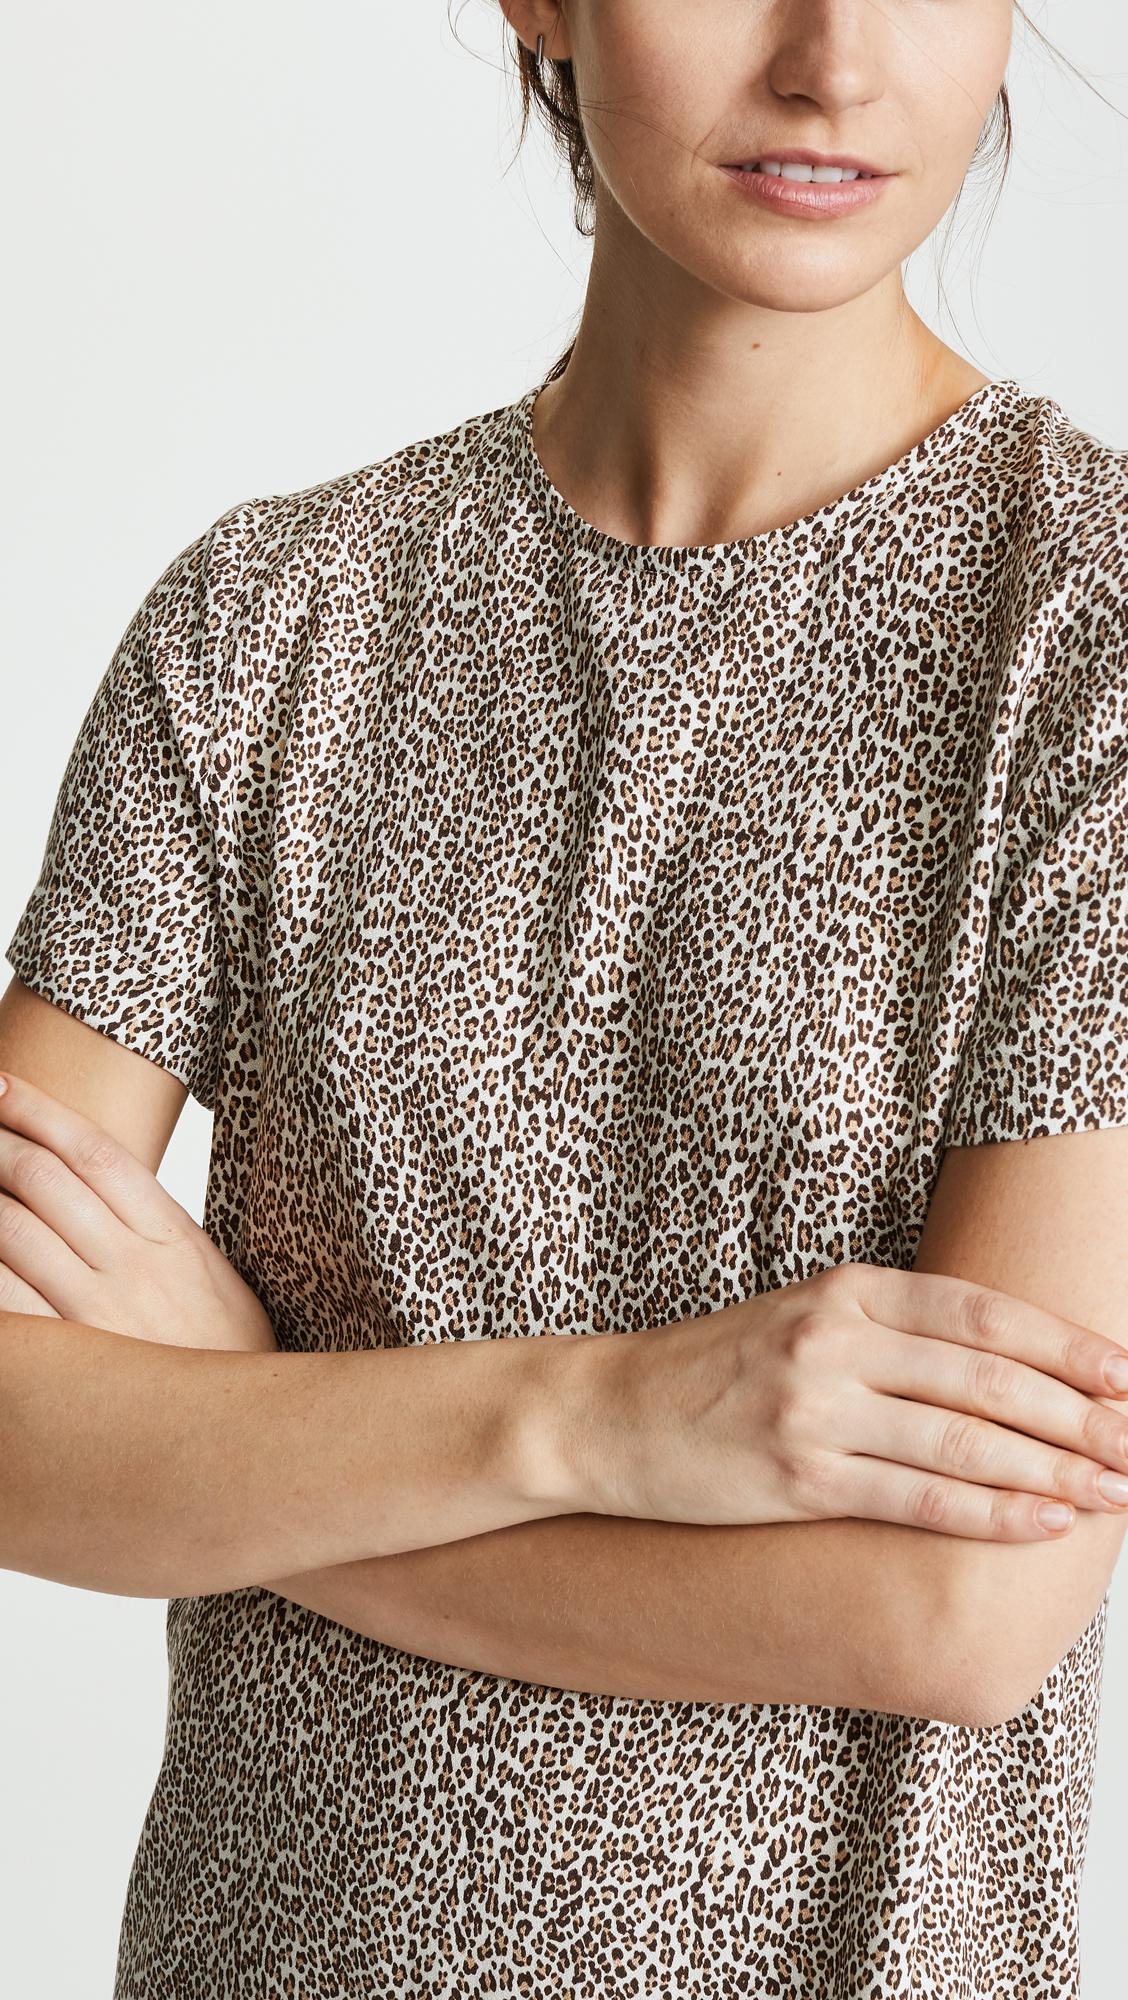 jenni kayne leopard t shirt dress